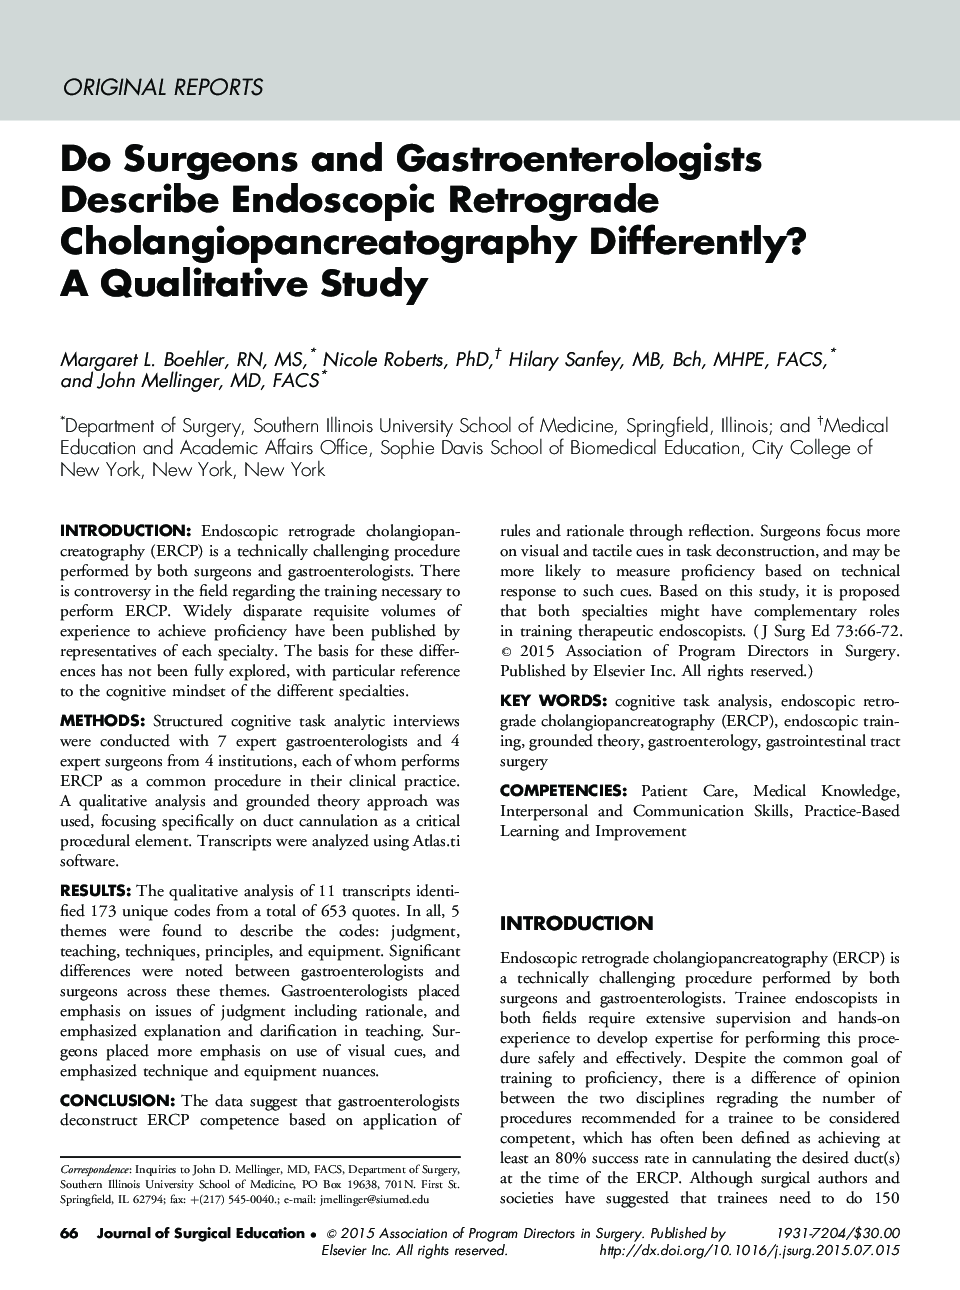 Do Surgeons and Gastroenterologists Describe Endoscopic Retrograde Cholangiopancreatography Differently? A Qualitative Study